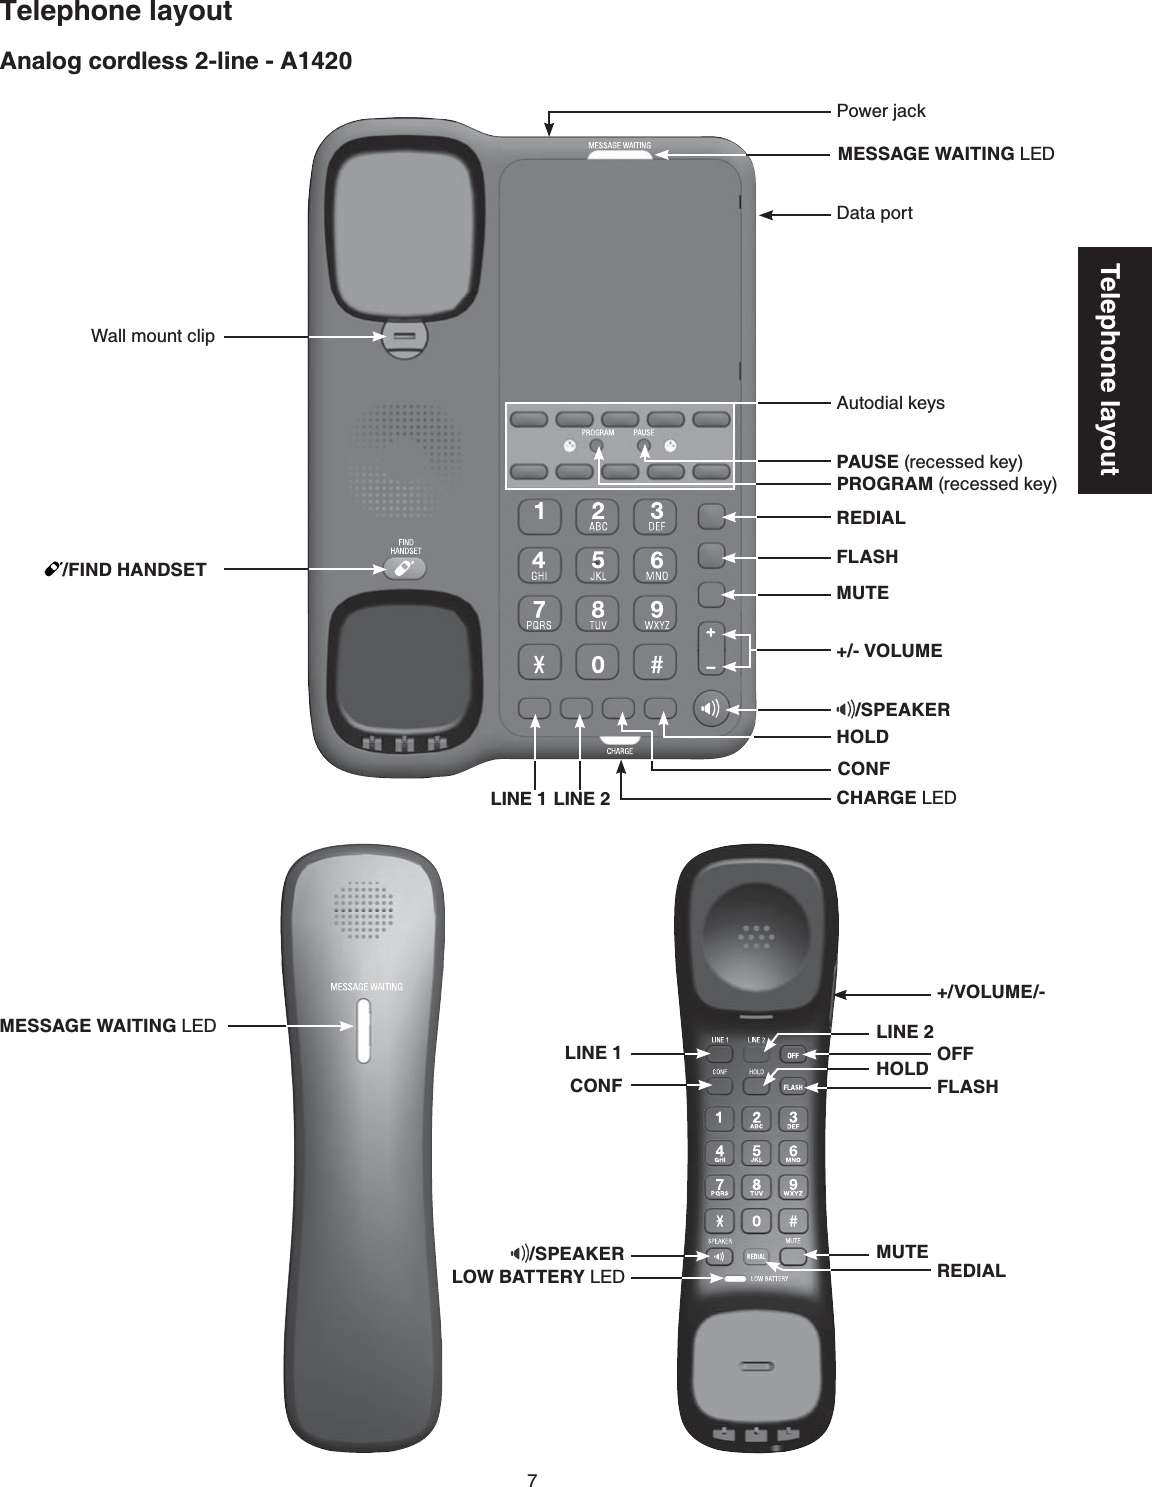 7Telephone layoutAnalog cordless 2-line - A1420Telephone layoutCHARGE.&apos;&amp;LINE 1 LINE 2CONFHOLD+/- VOLUMEMUTEFLASHREDIALPROGRAM (recessed key)PAUSE (recessed key)Autodial keys&amp;CVCRQTVMESSAGE WAITING.&apos;&amp;Power jackWall mount clipLINE 1CONFLINE 2HOLD OFFFLASHREDIALLOW BATTERY.&apos;&amp;MUTEMESSAGE WAITING.&apos;&amp;+/VOLUME/-/SPEAKER/SPEAKER/FIND HANDSET